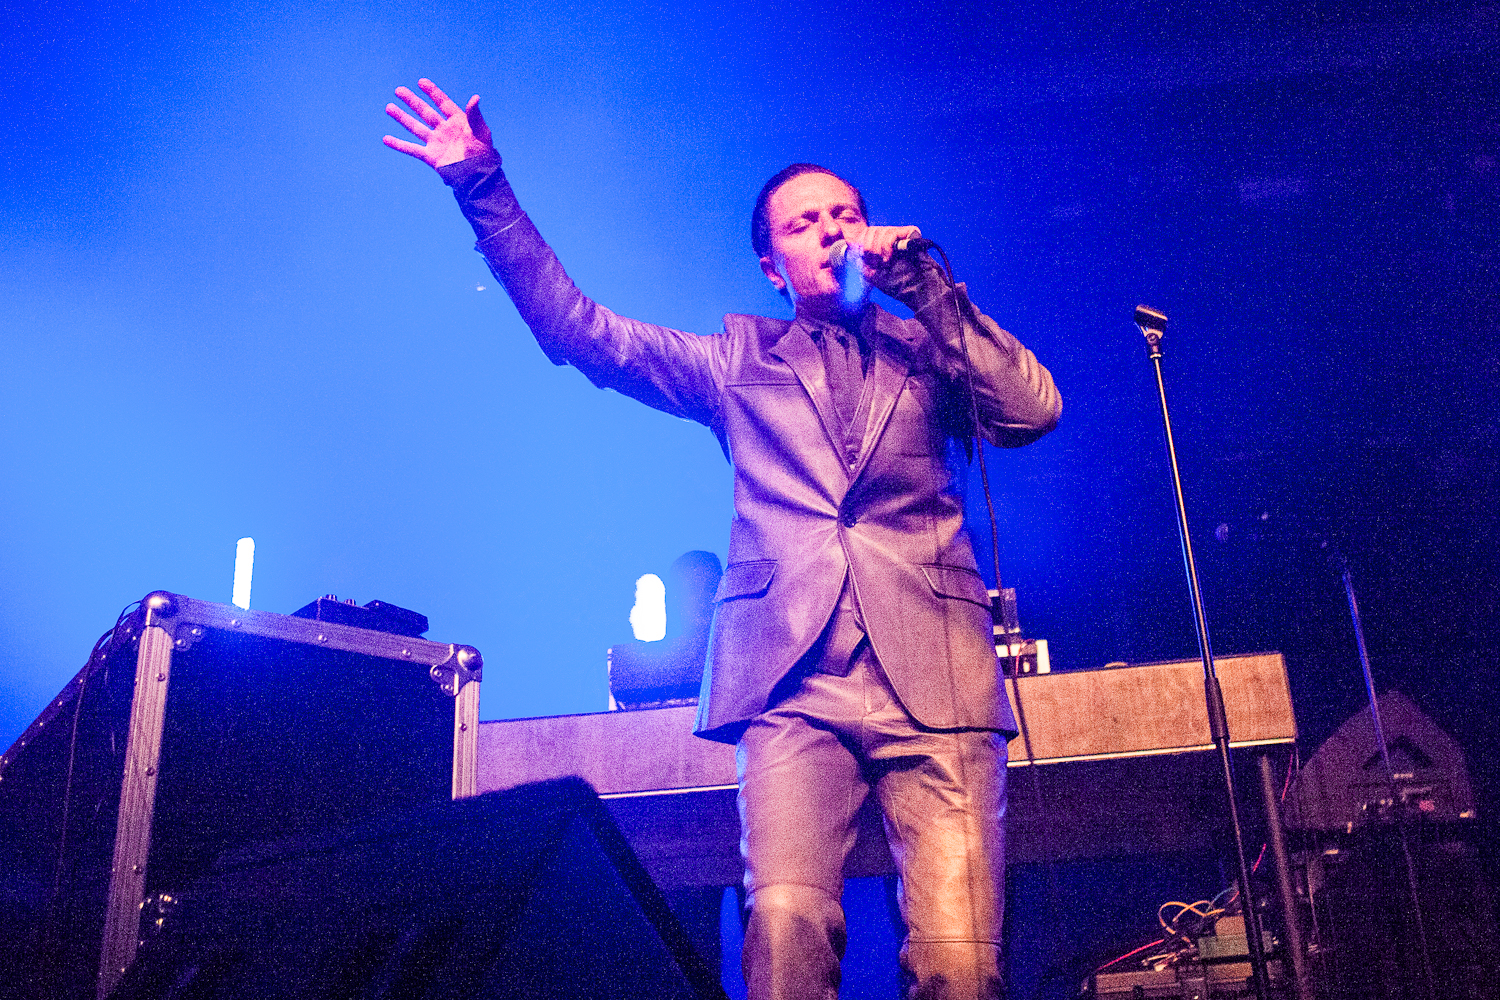 GusGus live at Iceland Airwaves at Harpa Concert Hall on November 3, 2012